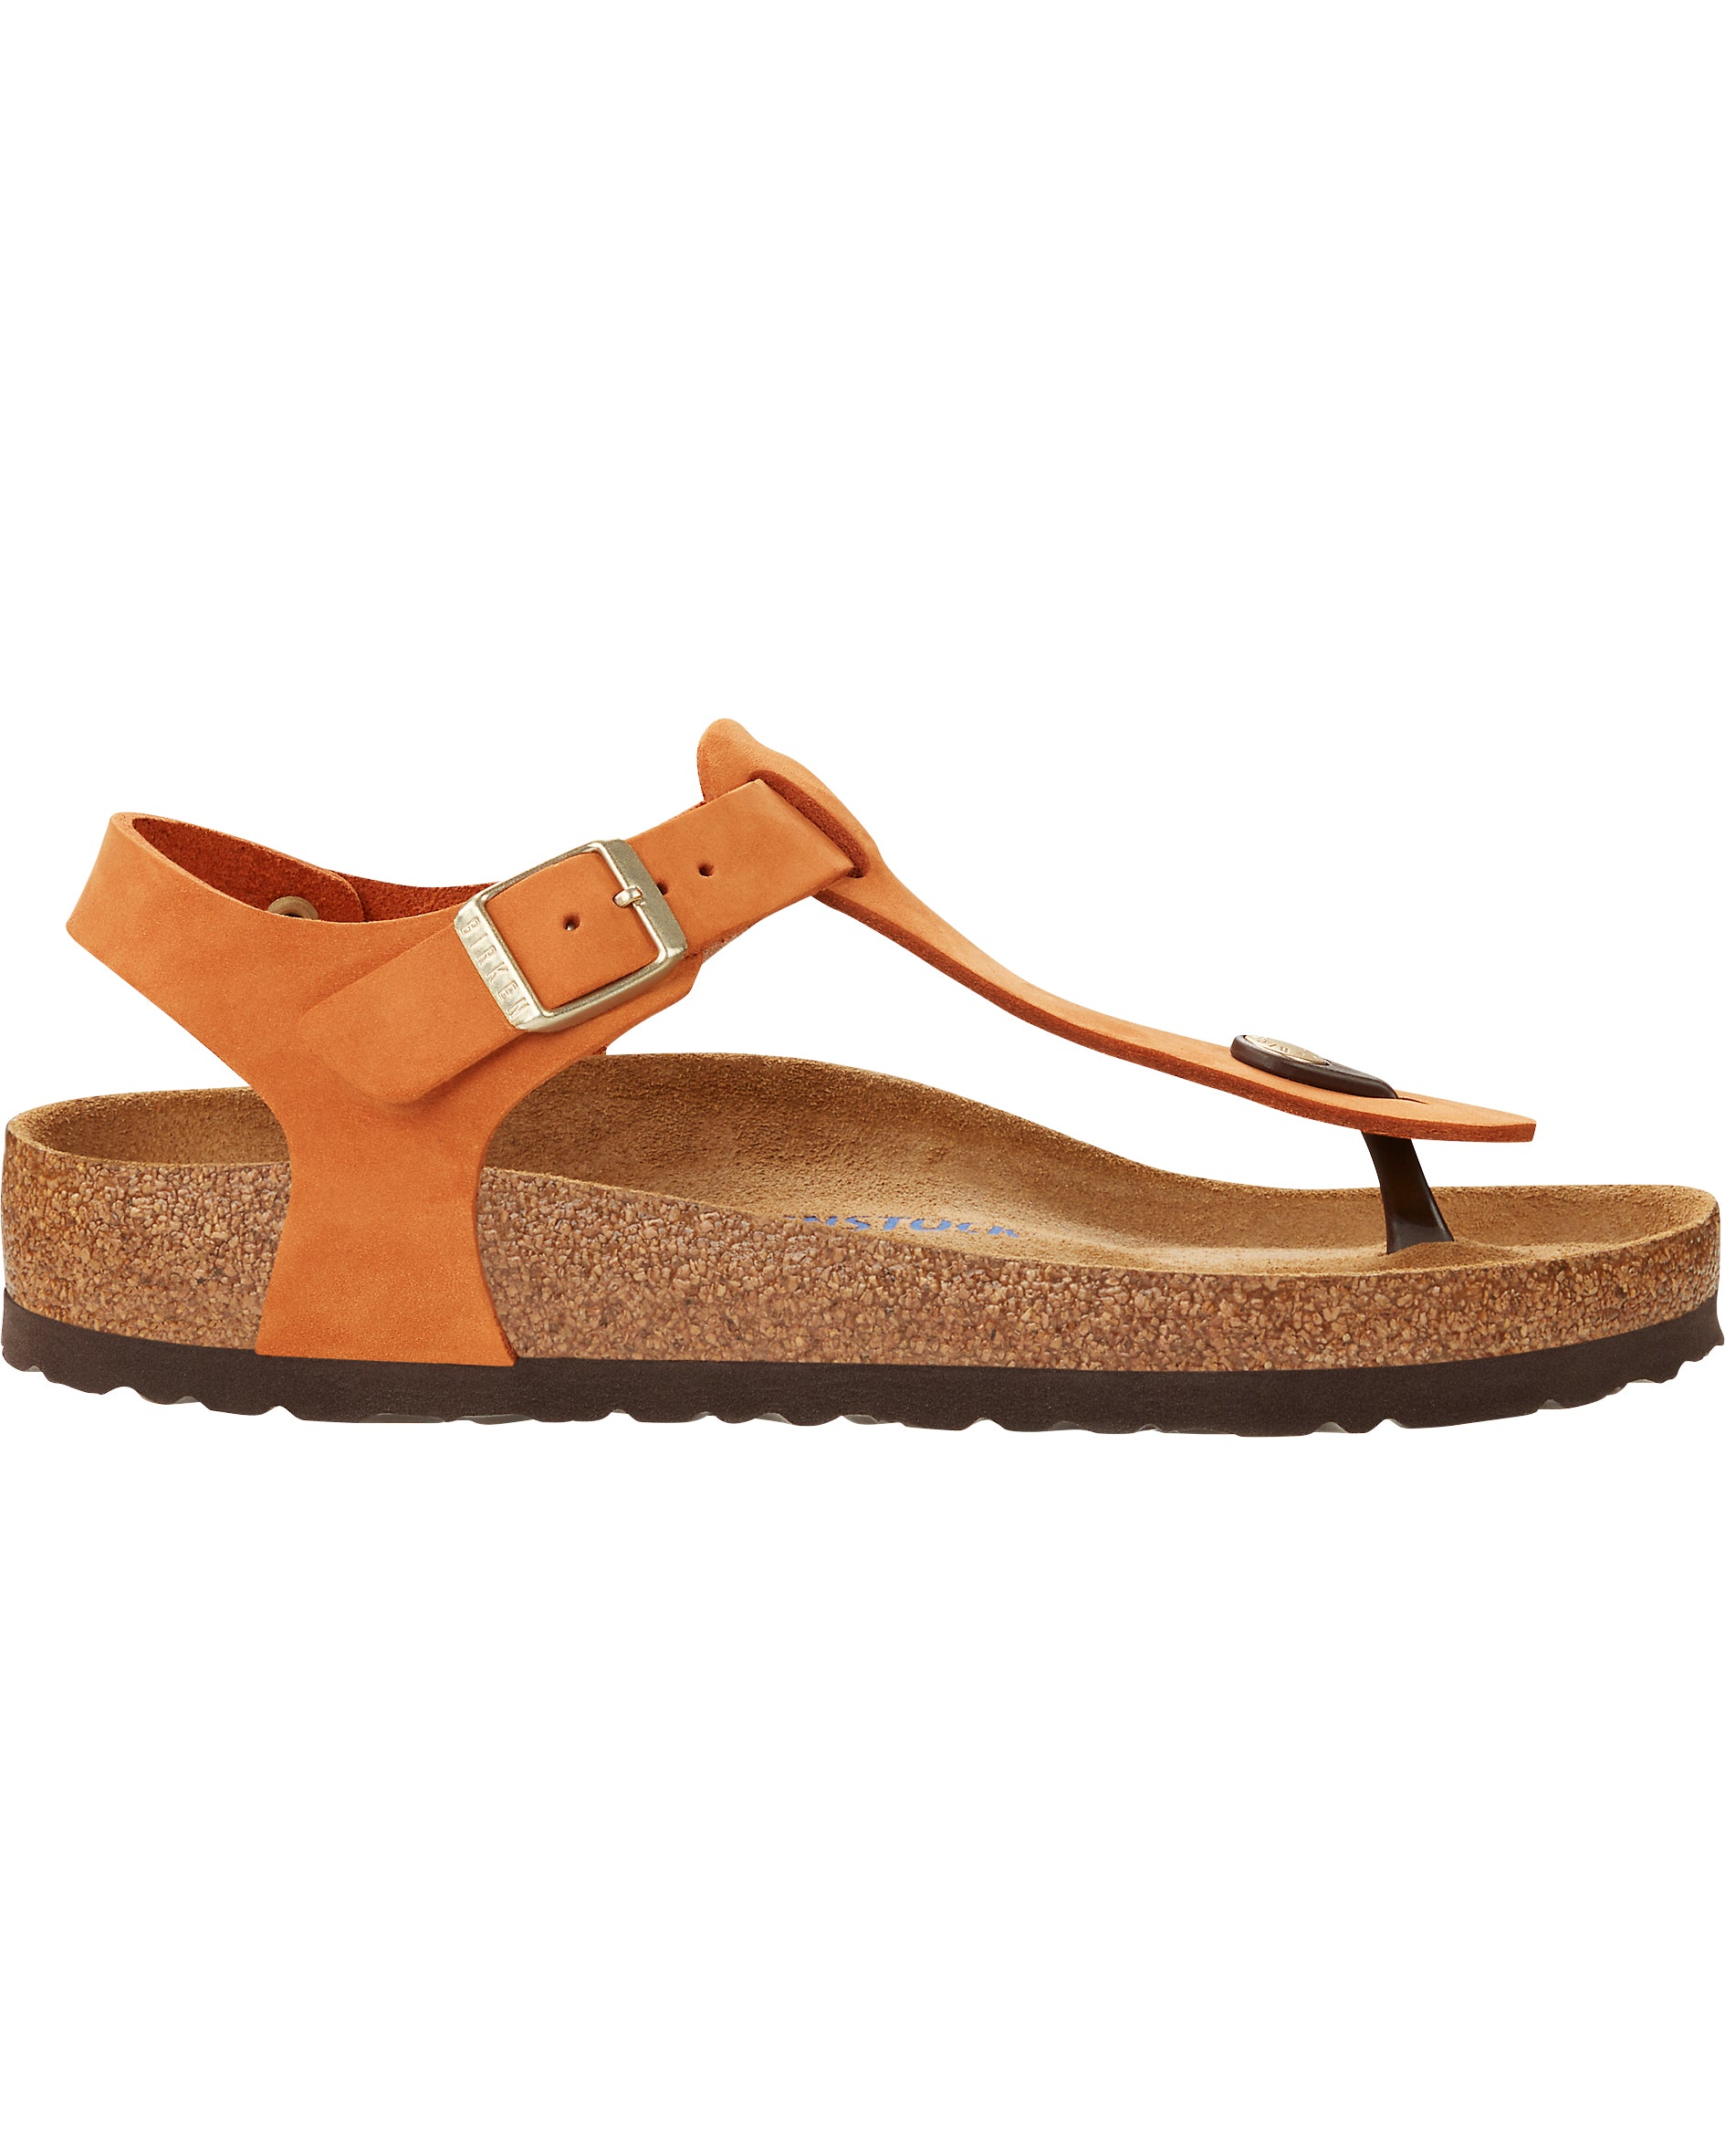 Kairo Soft Footbed Pecan Nubuck Leather Sandals